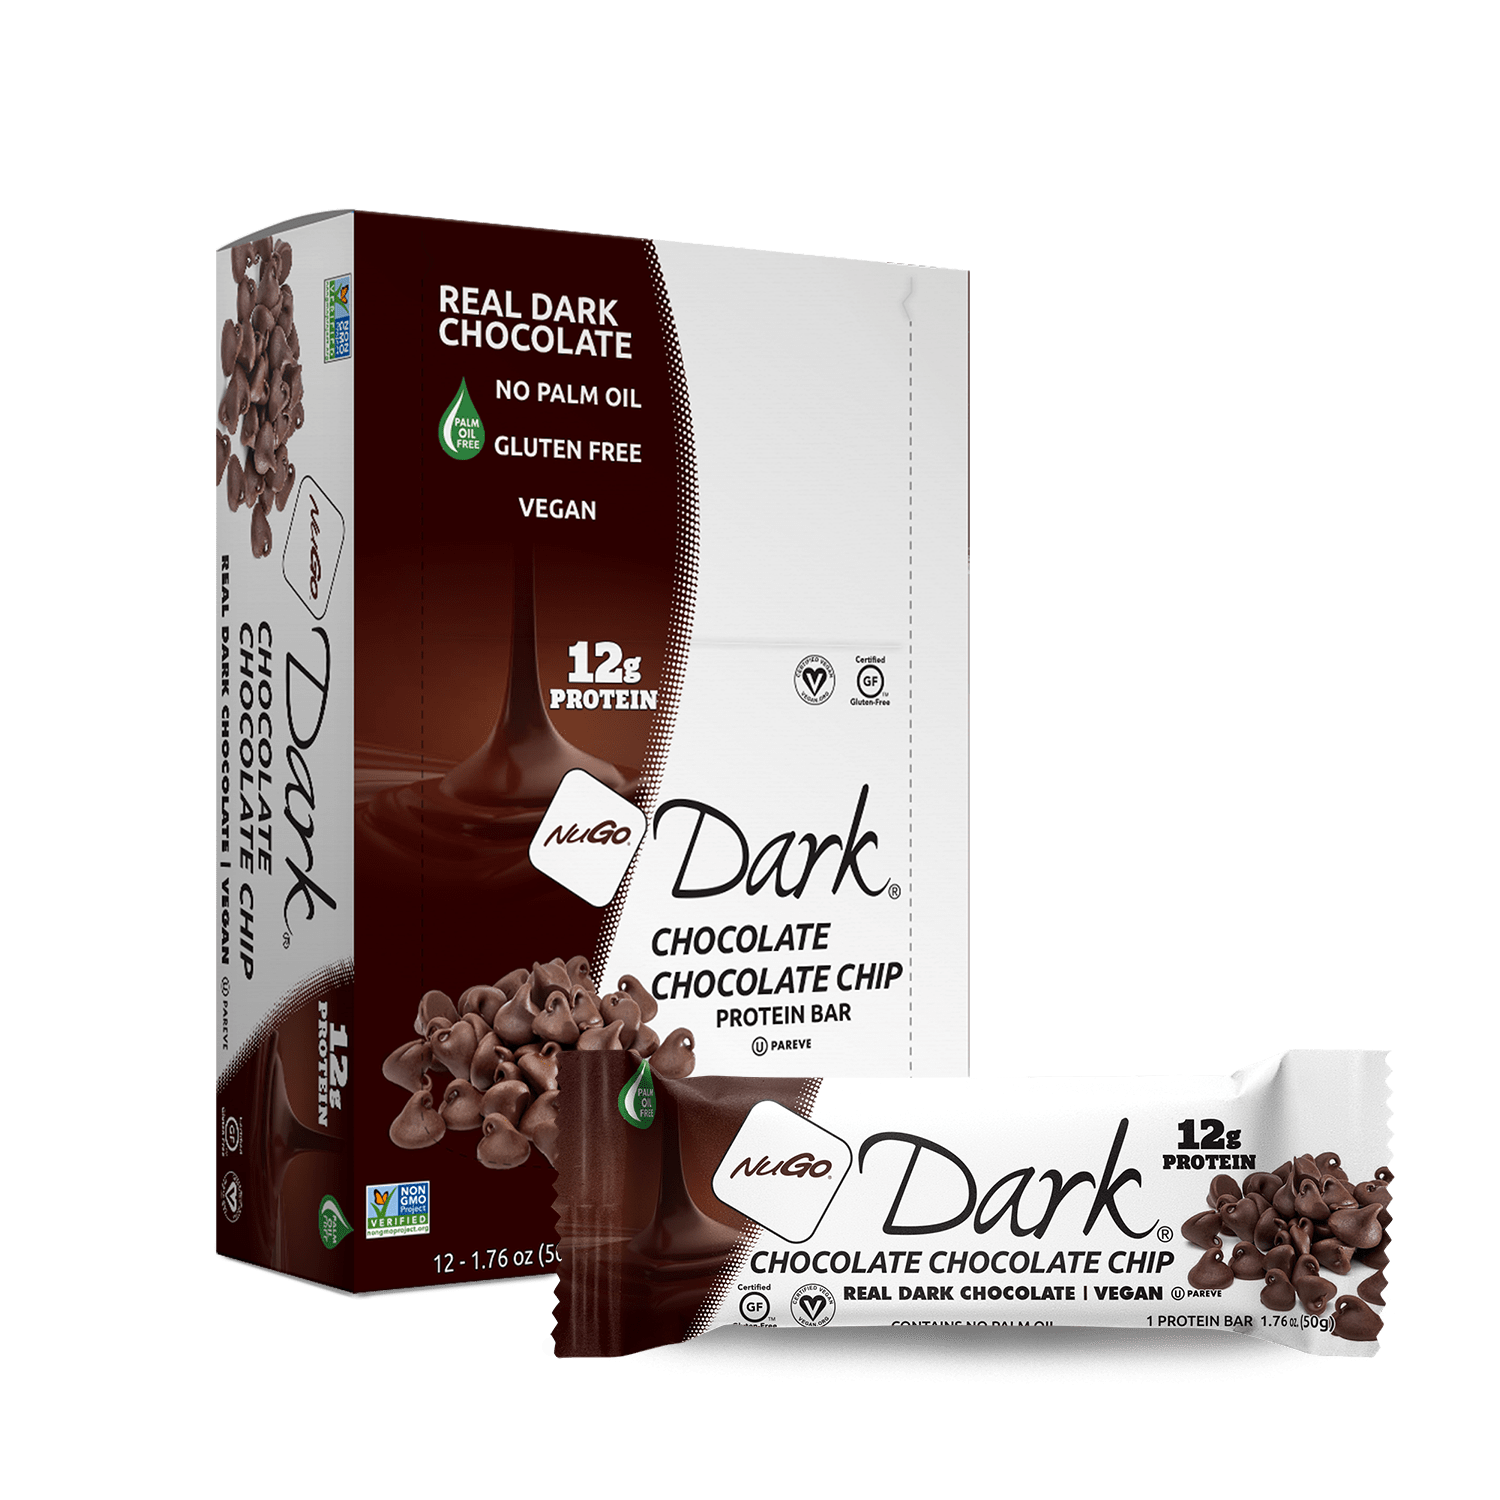 NuGo Dark Chocolate Chocolate Chip Bar and Box